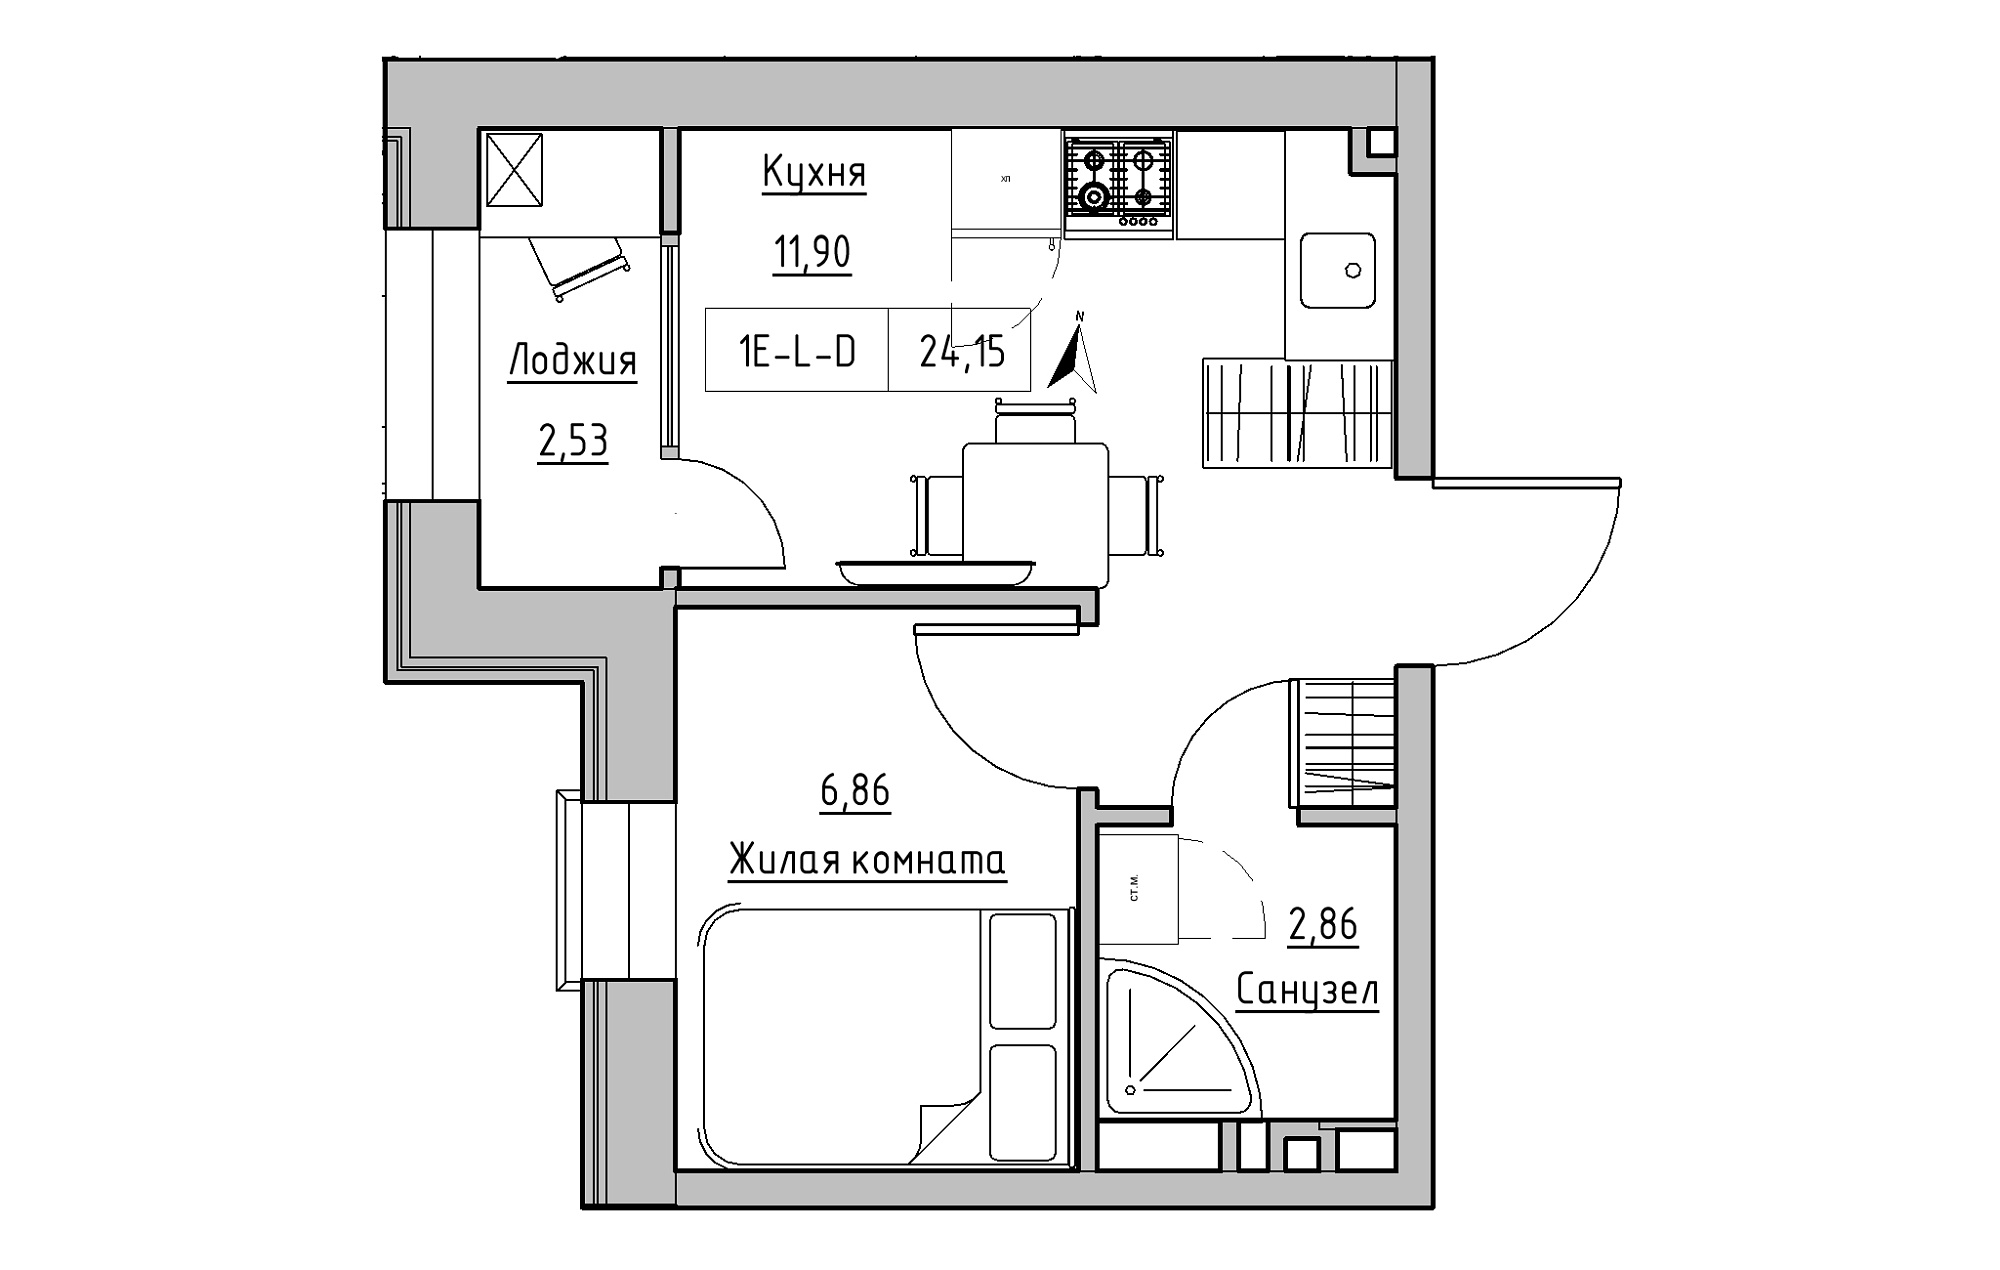 Planning 1-rm flats area 24.15m2, KS-019-01/0001.